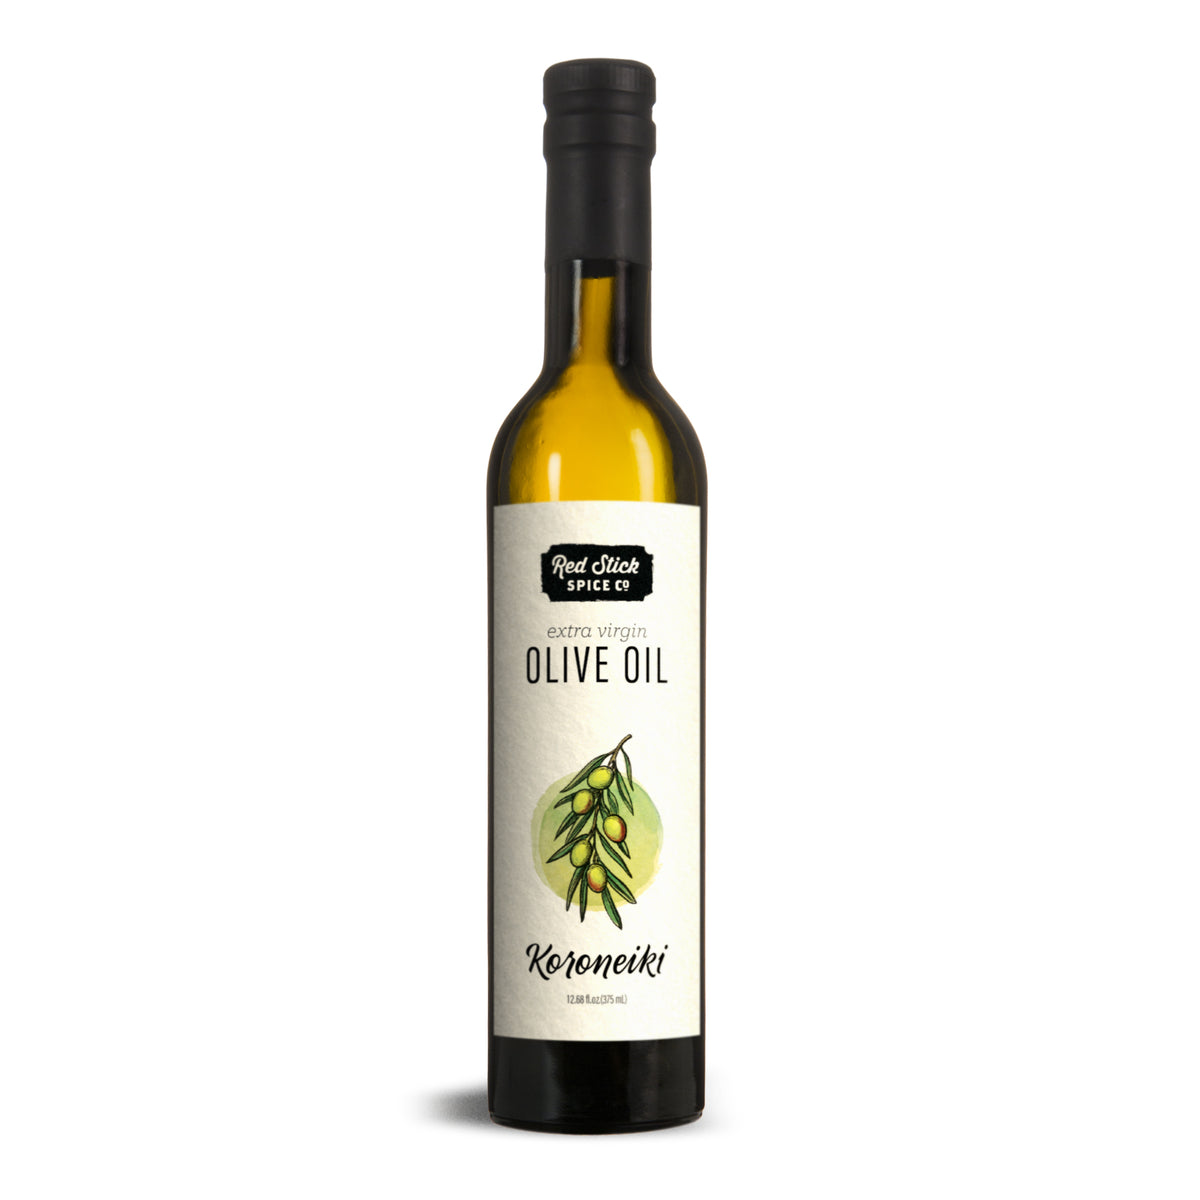 Koroneiki Extra Virgin Olive Oil